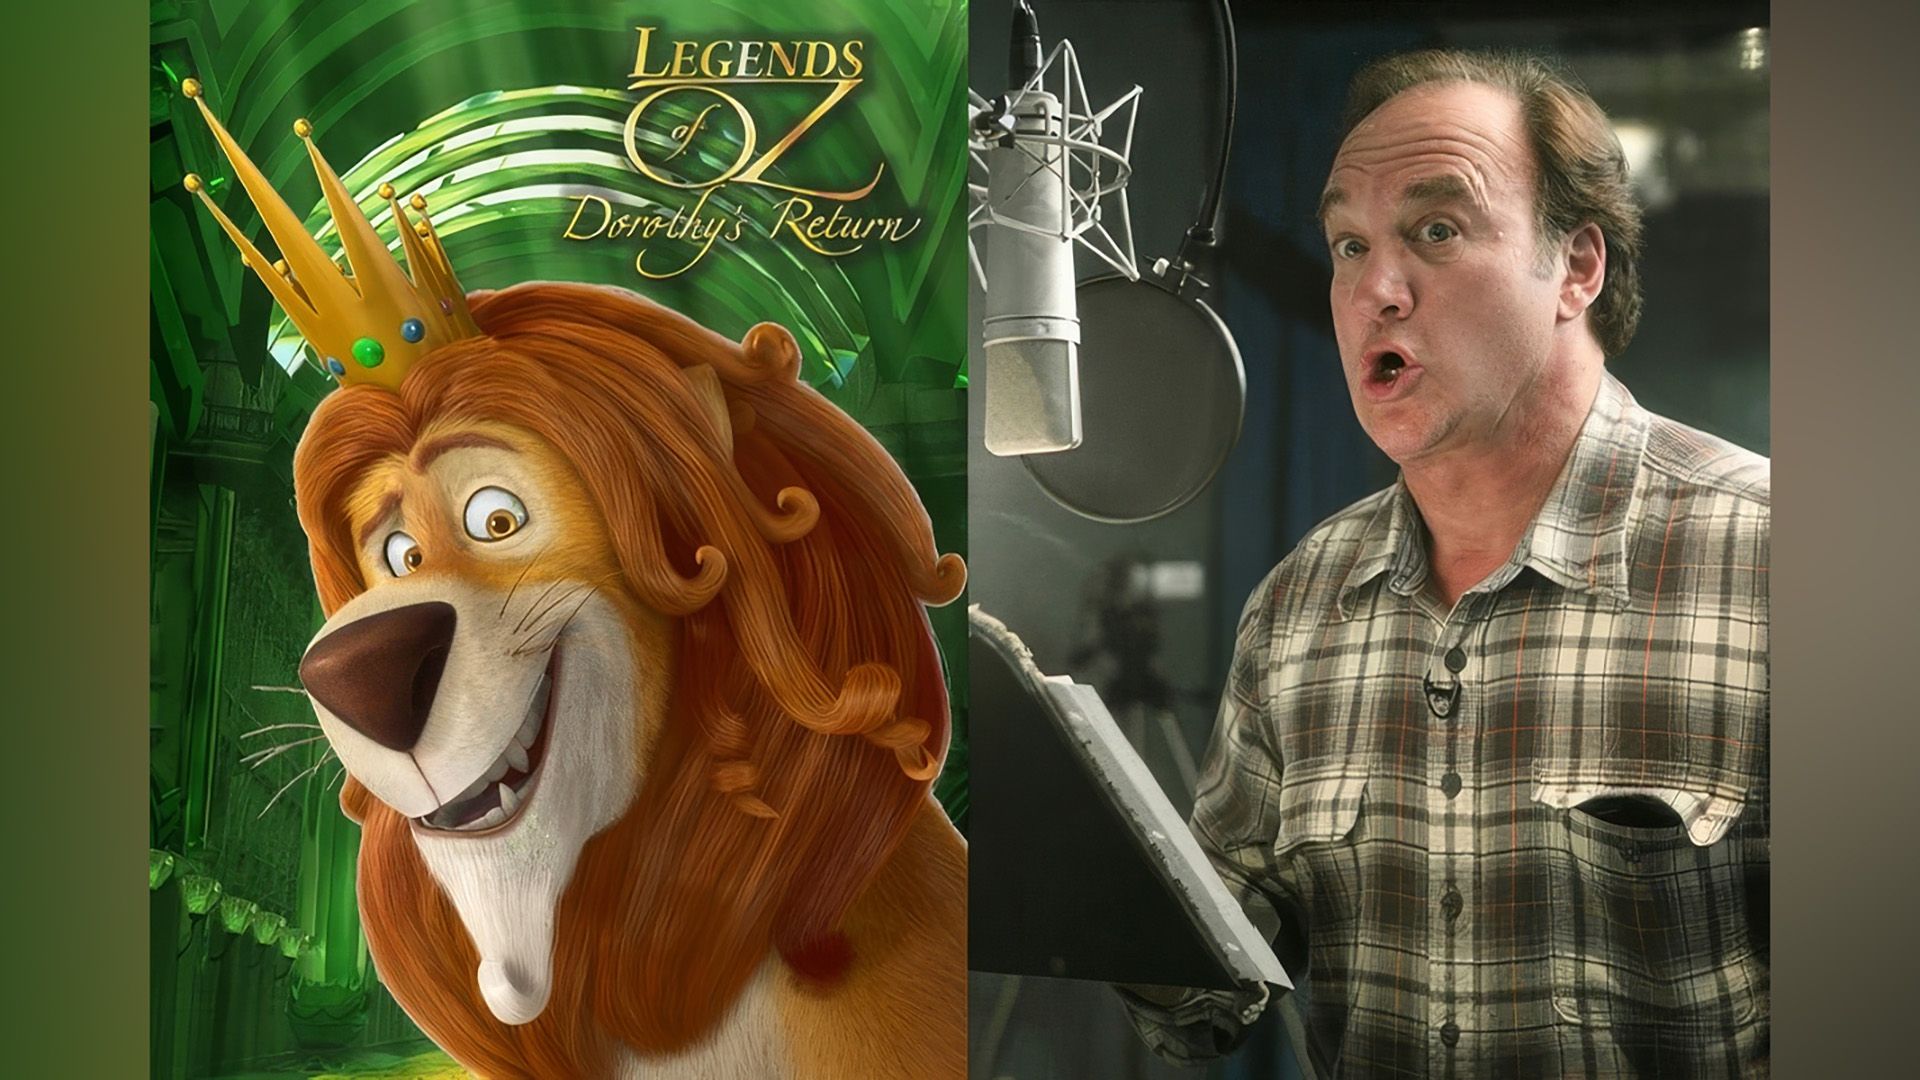 Jim Belushi voiced the Cowardly Lion in Legends of Oz: Dorothy's Return